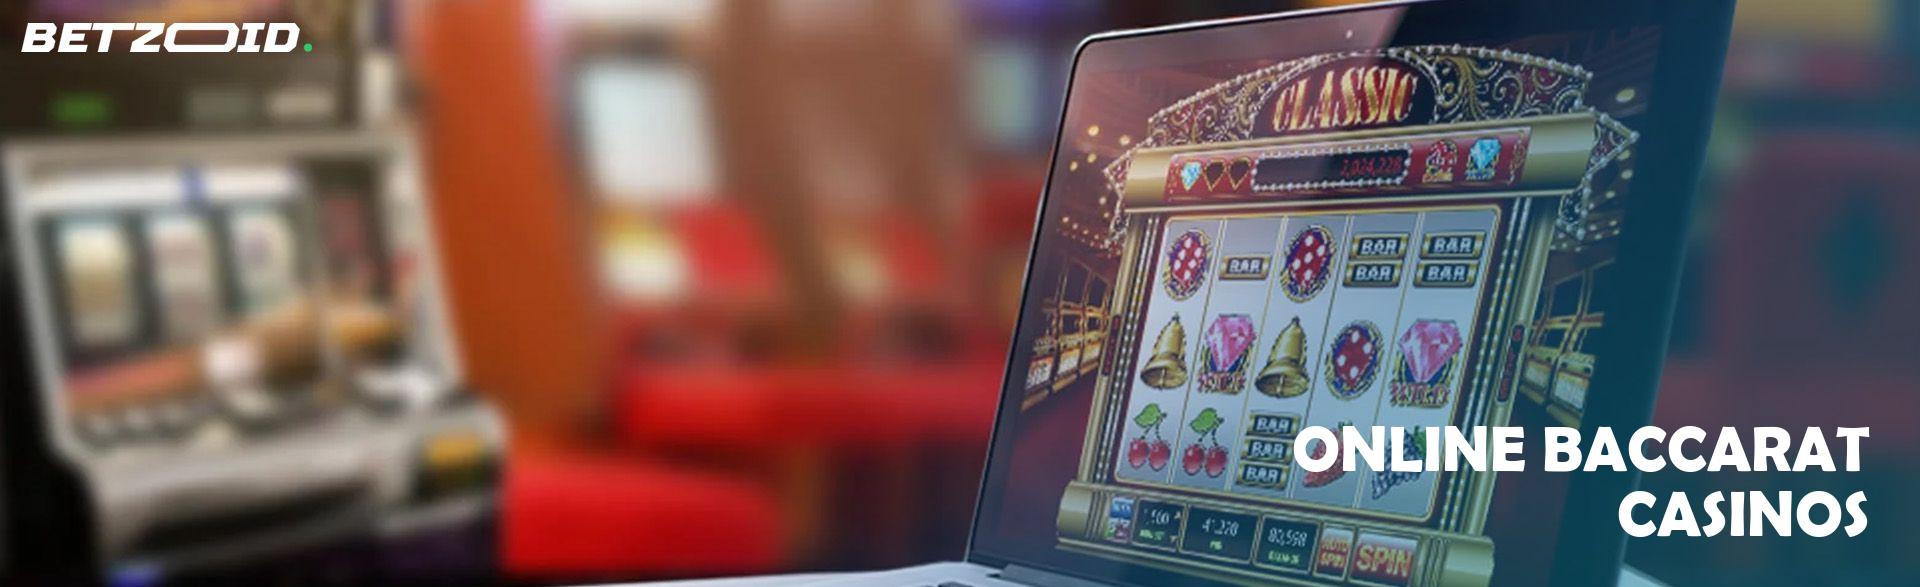 Online Baccarat Casinos.